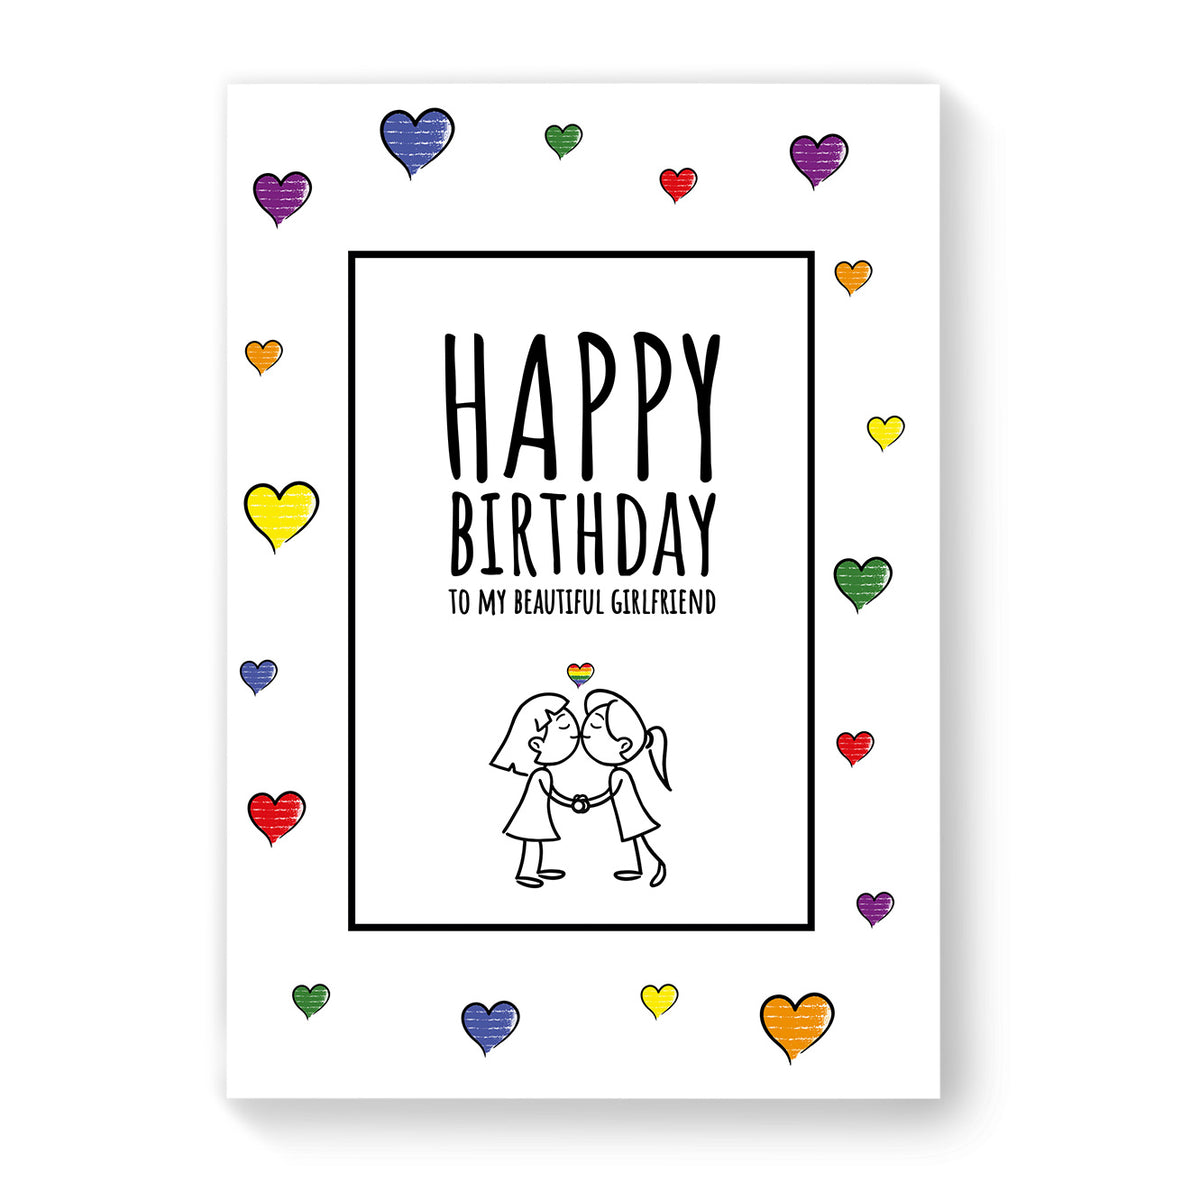 Happy Birthday to my beautiful girlfriend - Lesbian Gay Birthday Card - White Heart | Gift